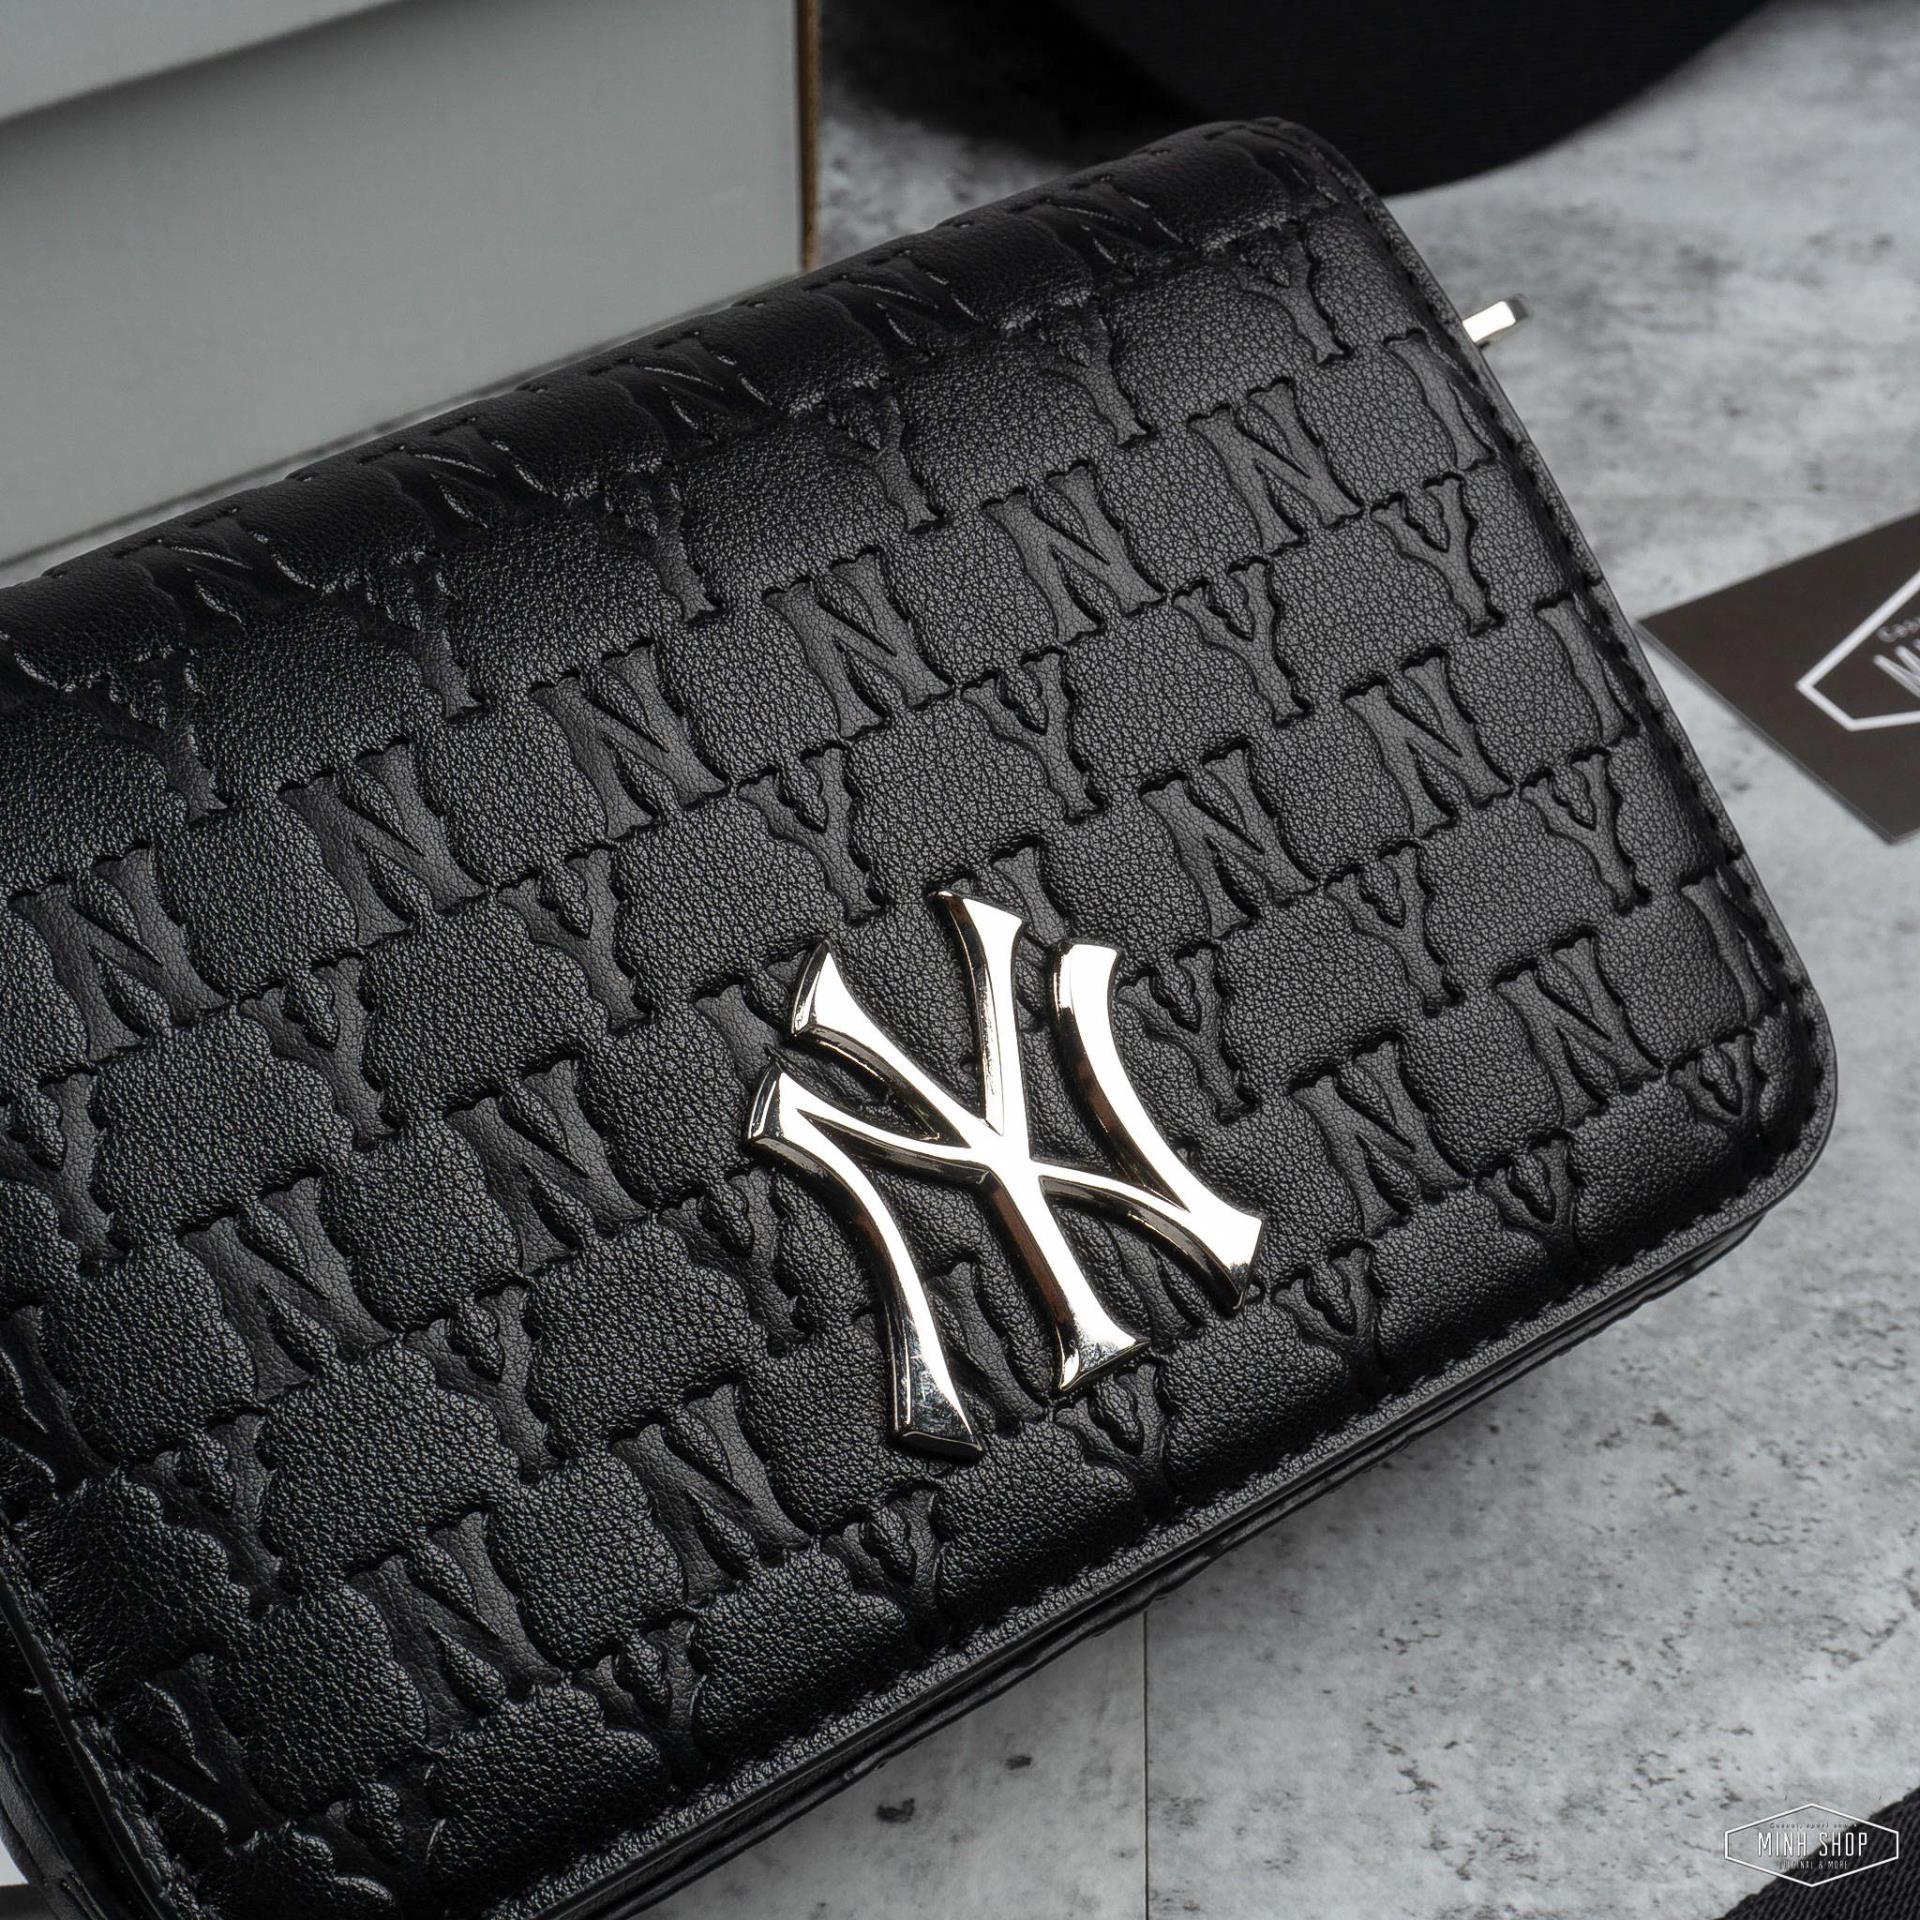  Túi MLB Mini Monogram Hoodie bag New York Yankees